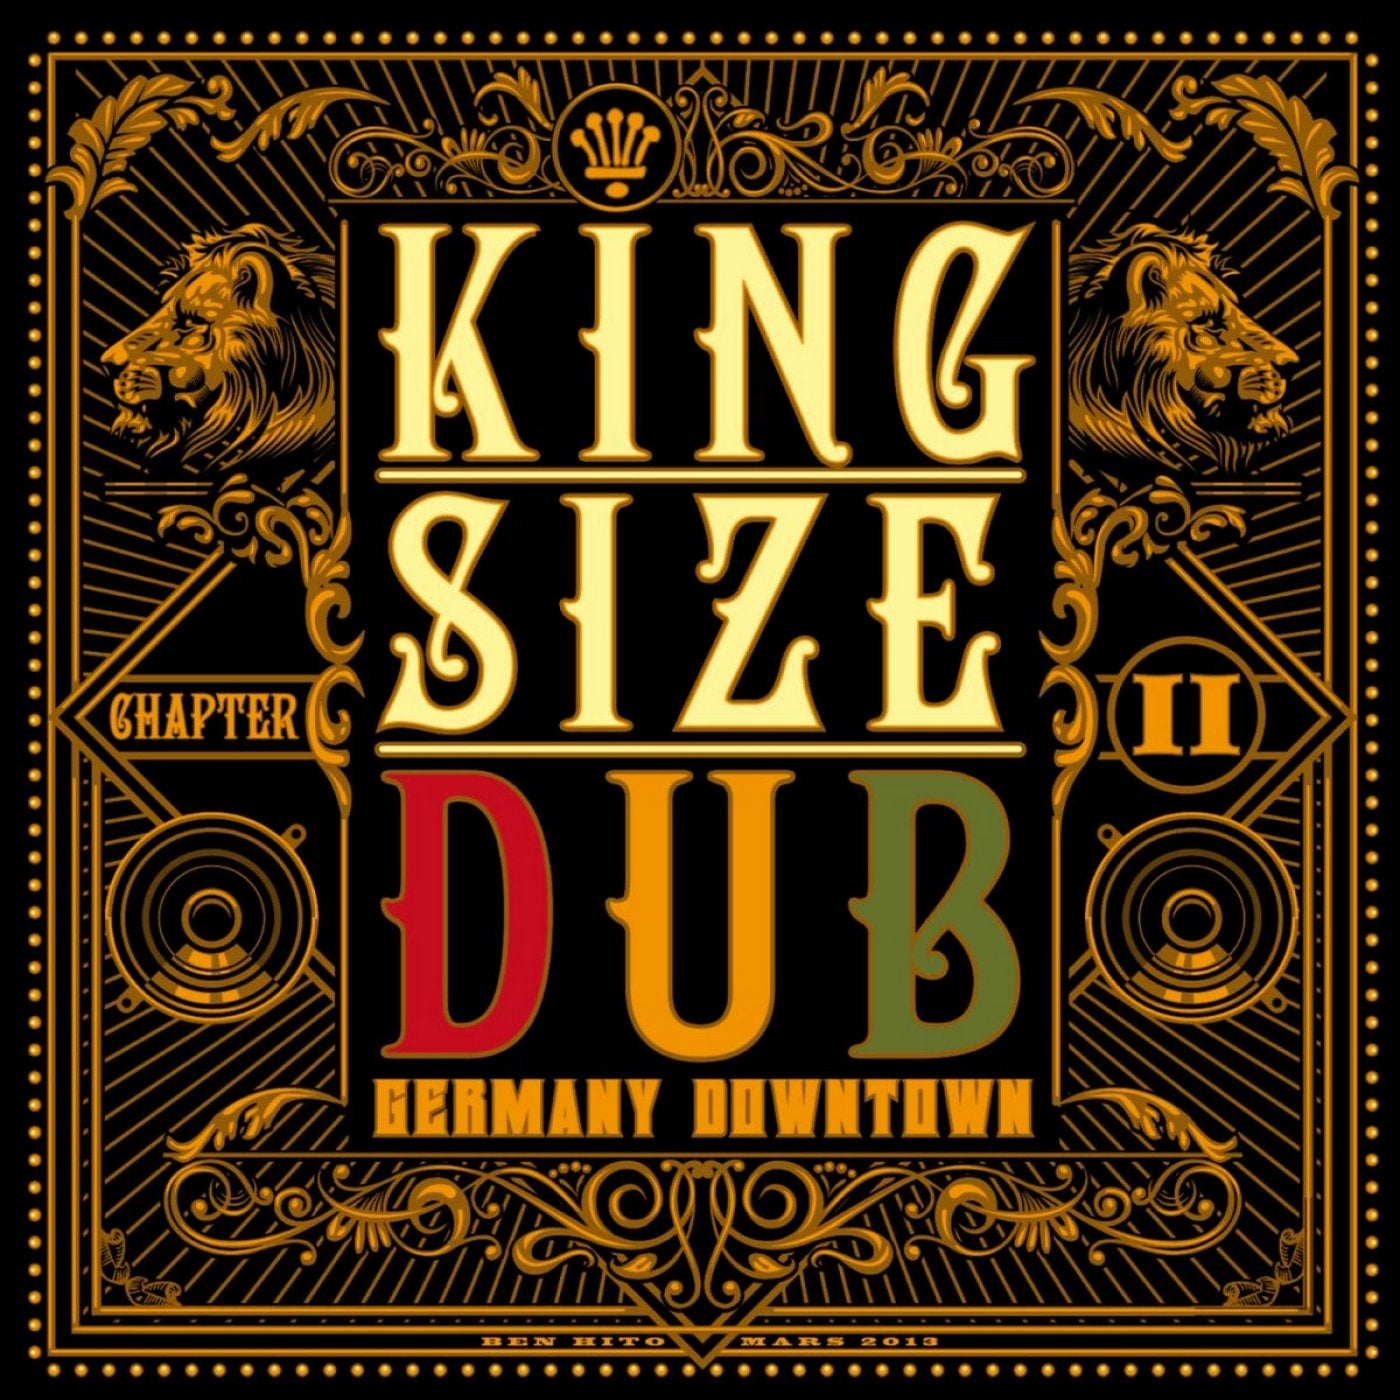 King Size Dub - Reggae Germany Downtown, Vol. 2